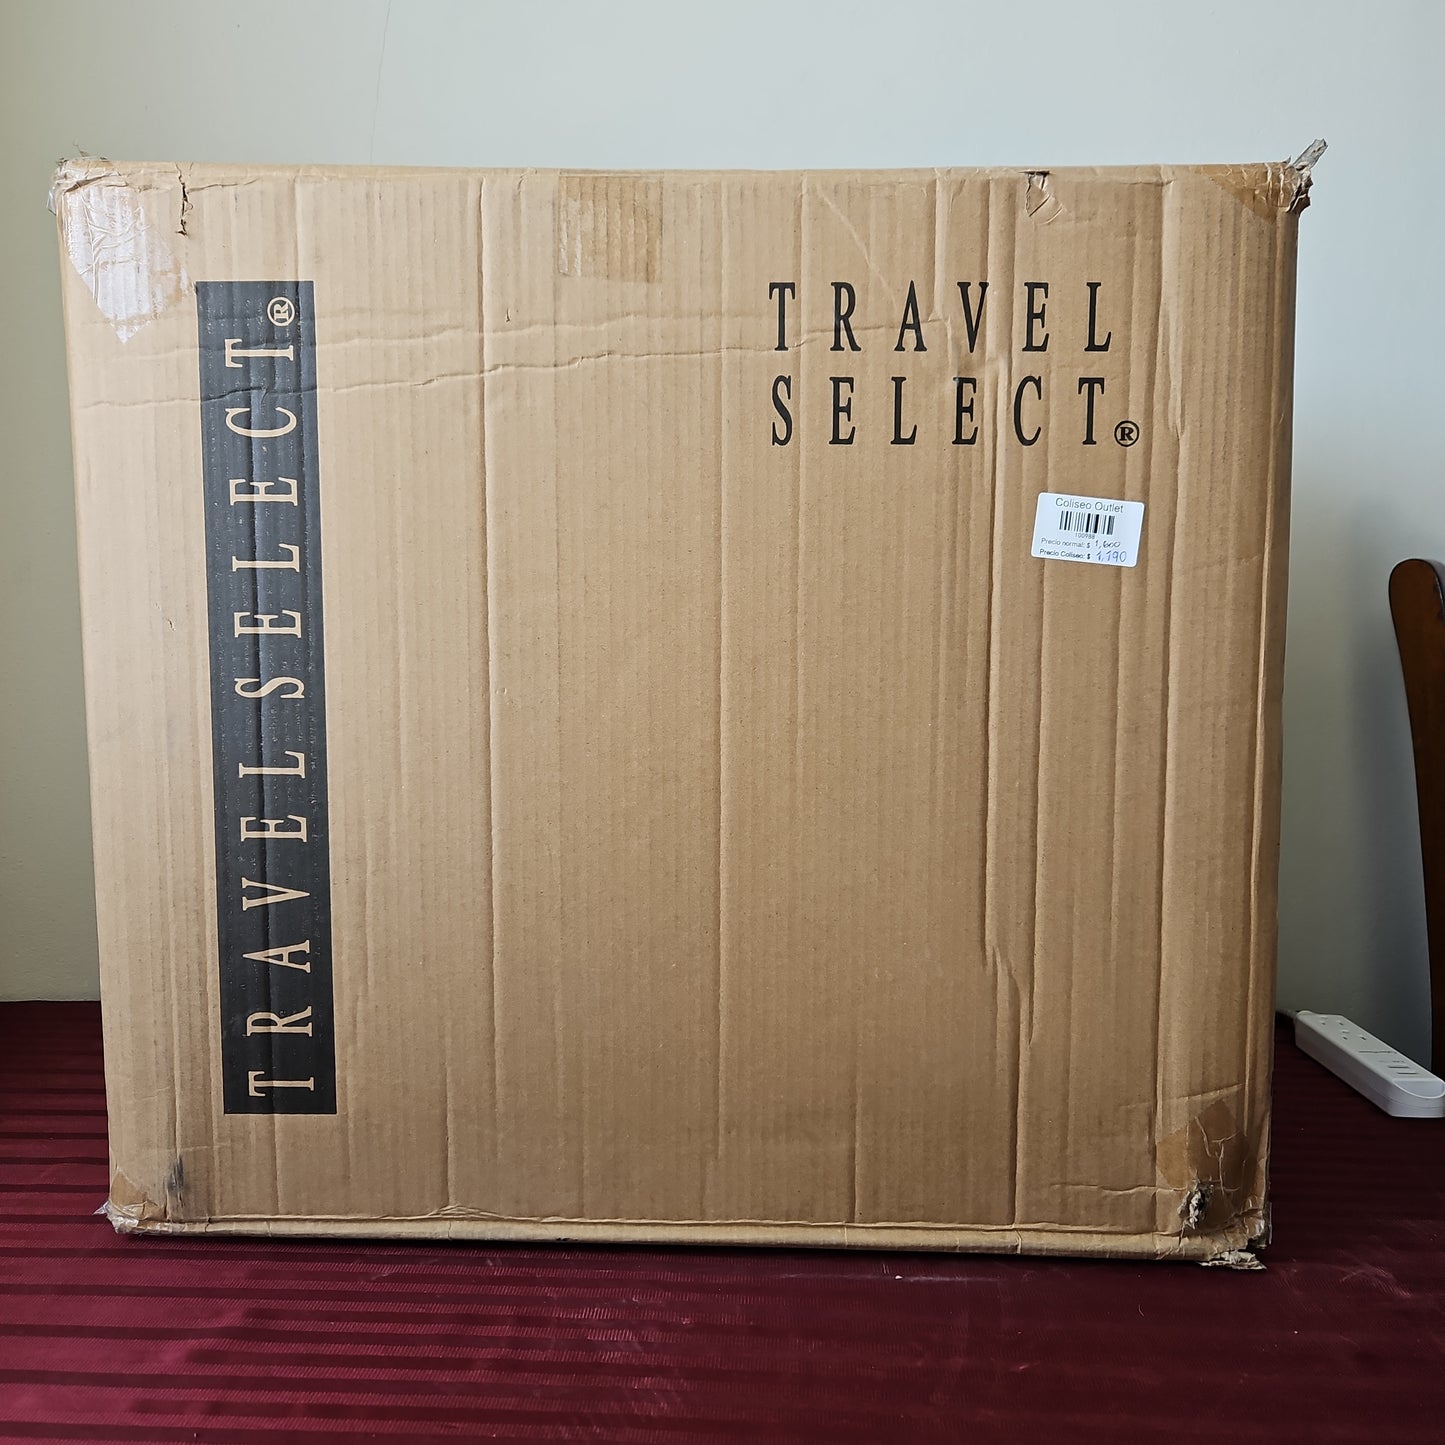 Maleta para equipaje de viaje con ruedas - Traveler's Choice (Nuevo)